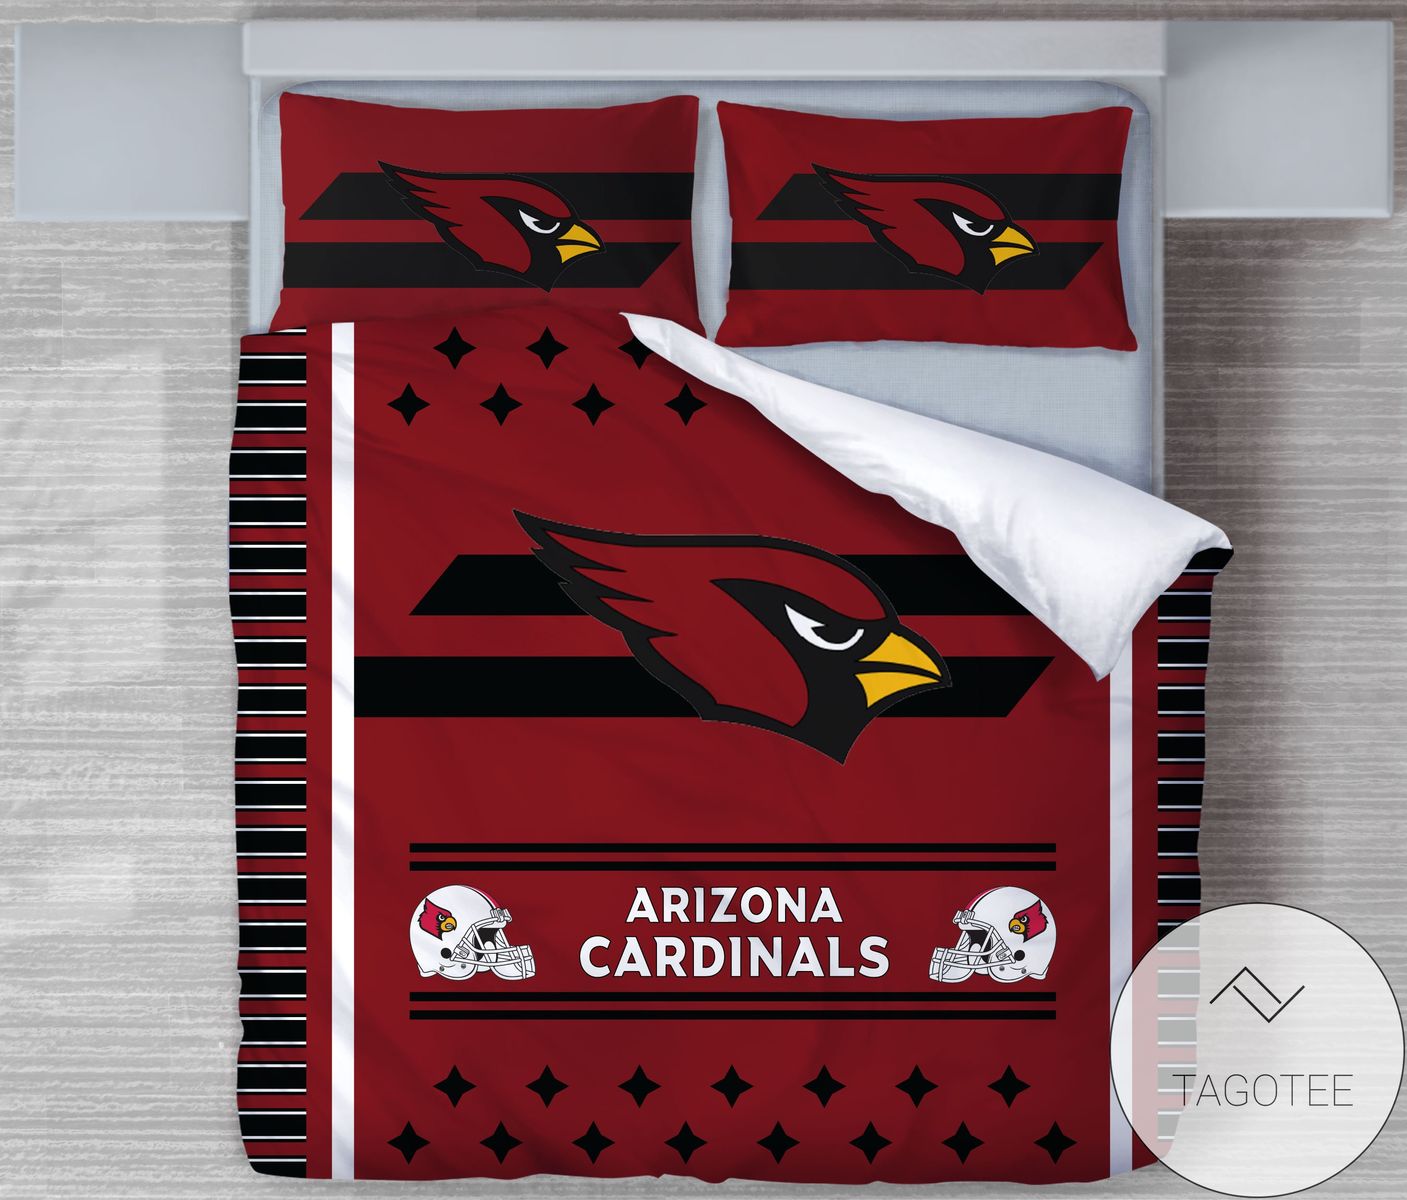 Arizona Cardinals NFL Bedding Set High Quality Duvet Cover